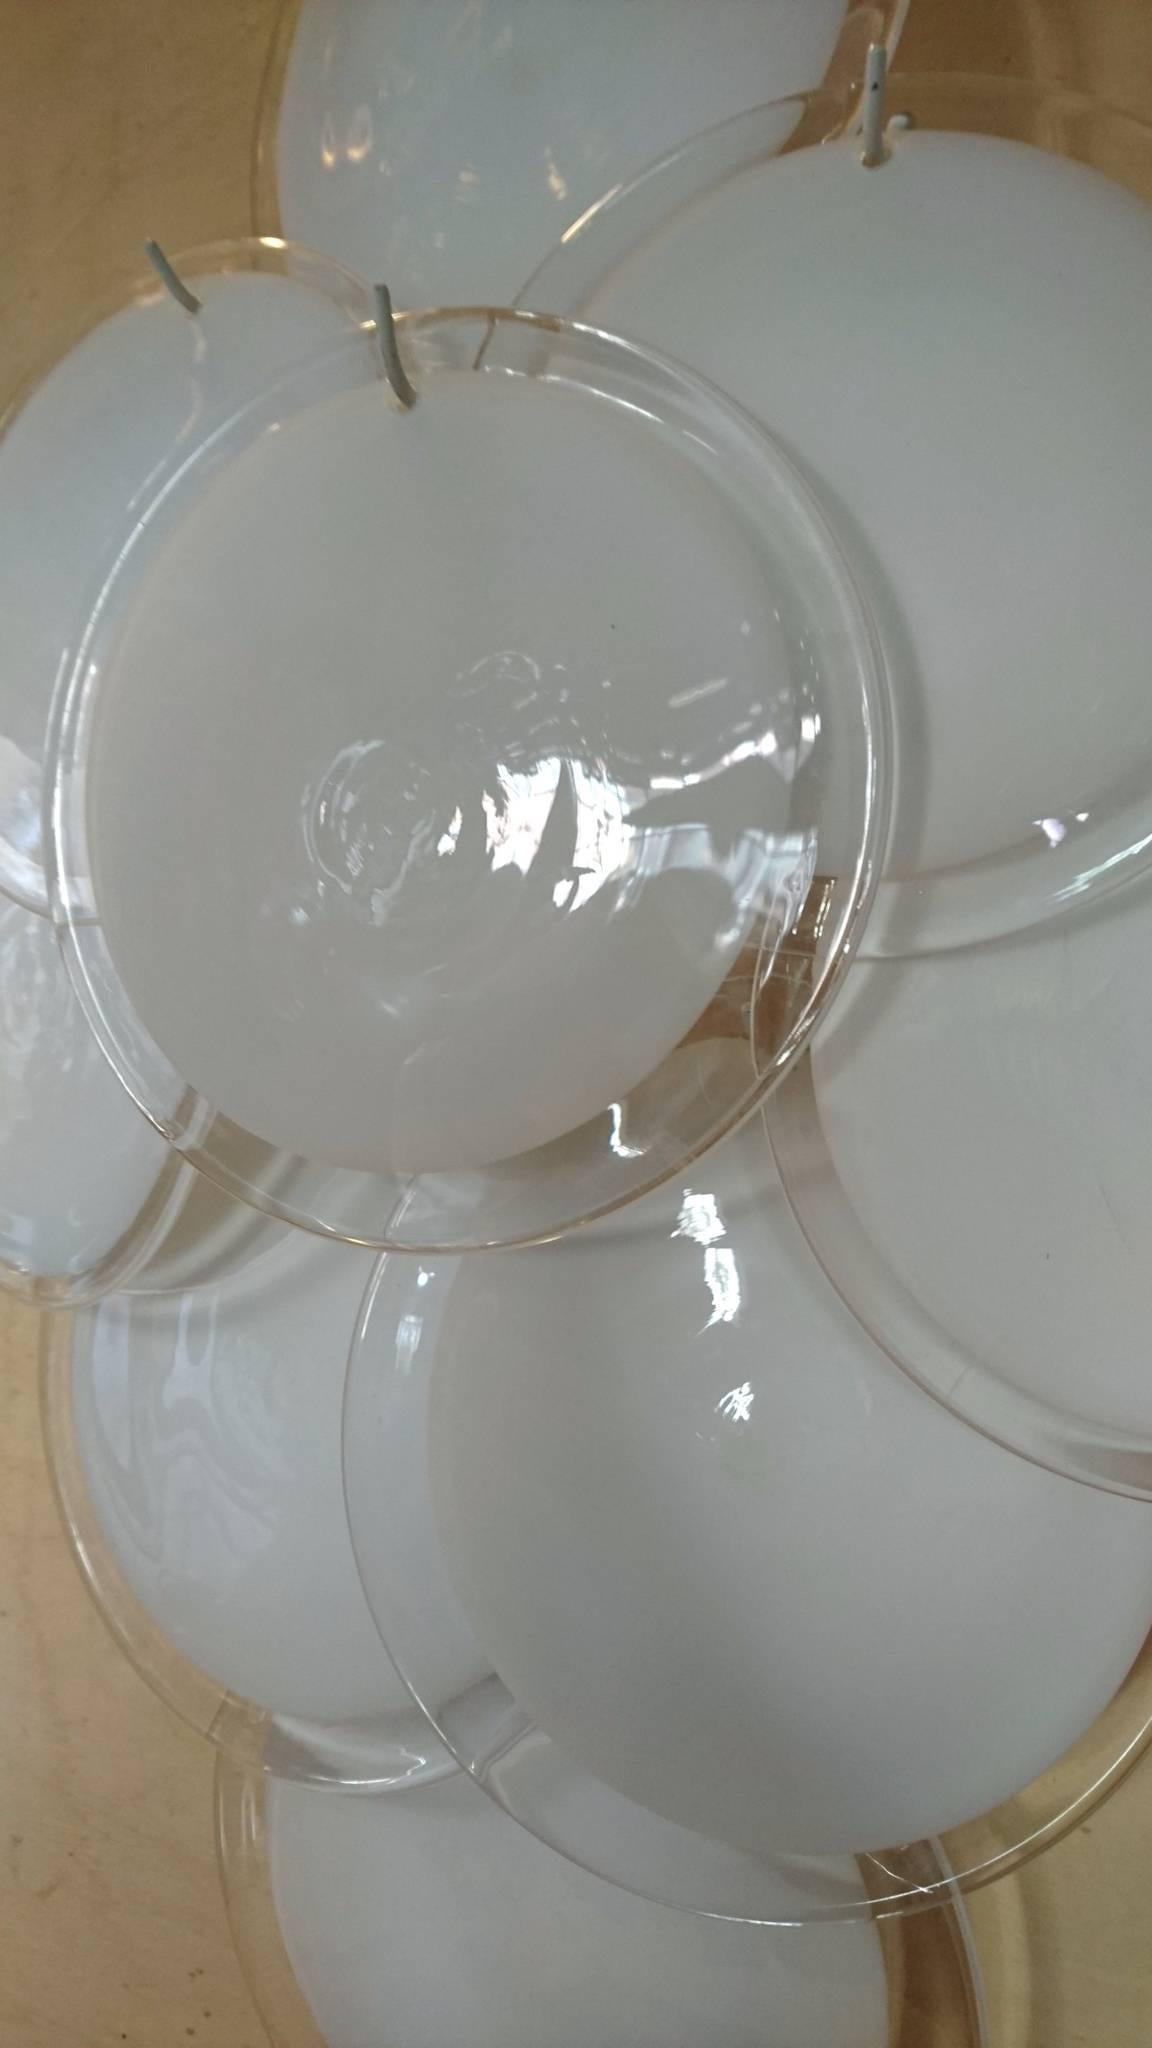 Italian Pair of Vistosi Wall Sconces with White Glass Discs